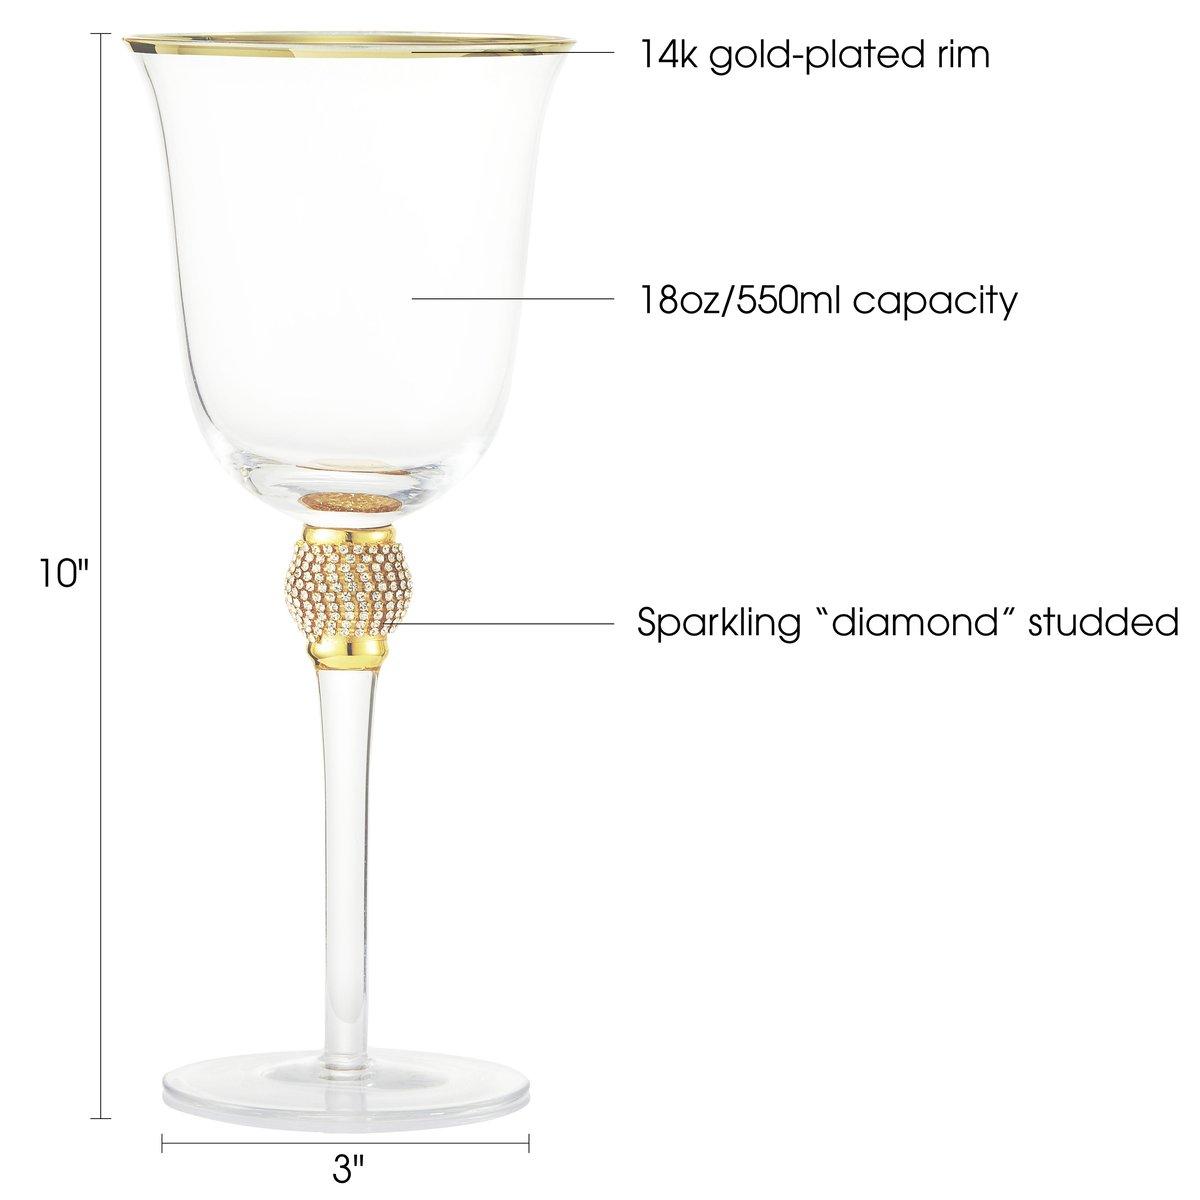 4-Piece Goldtone-Accented Wine Glass Set